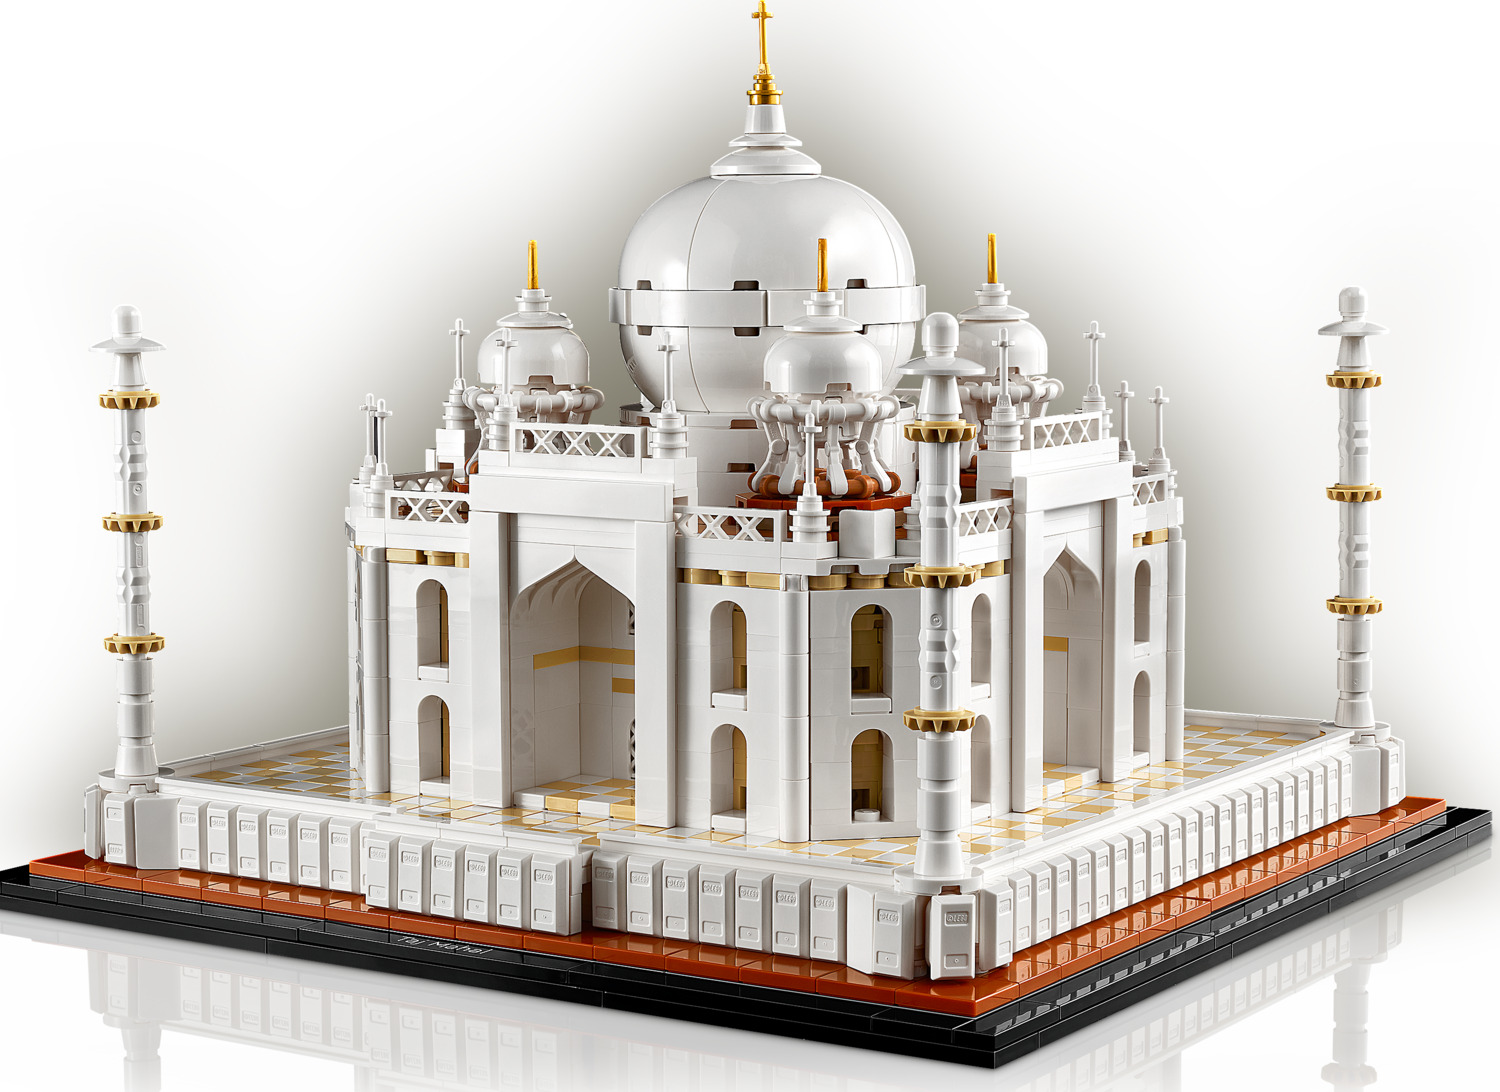 LEGO Architecture: Taj Mahal